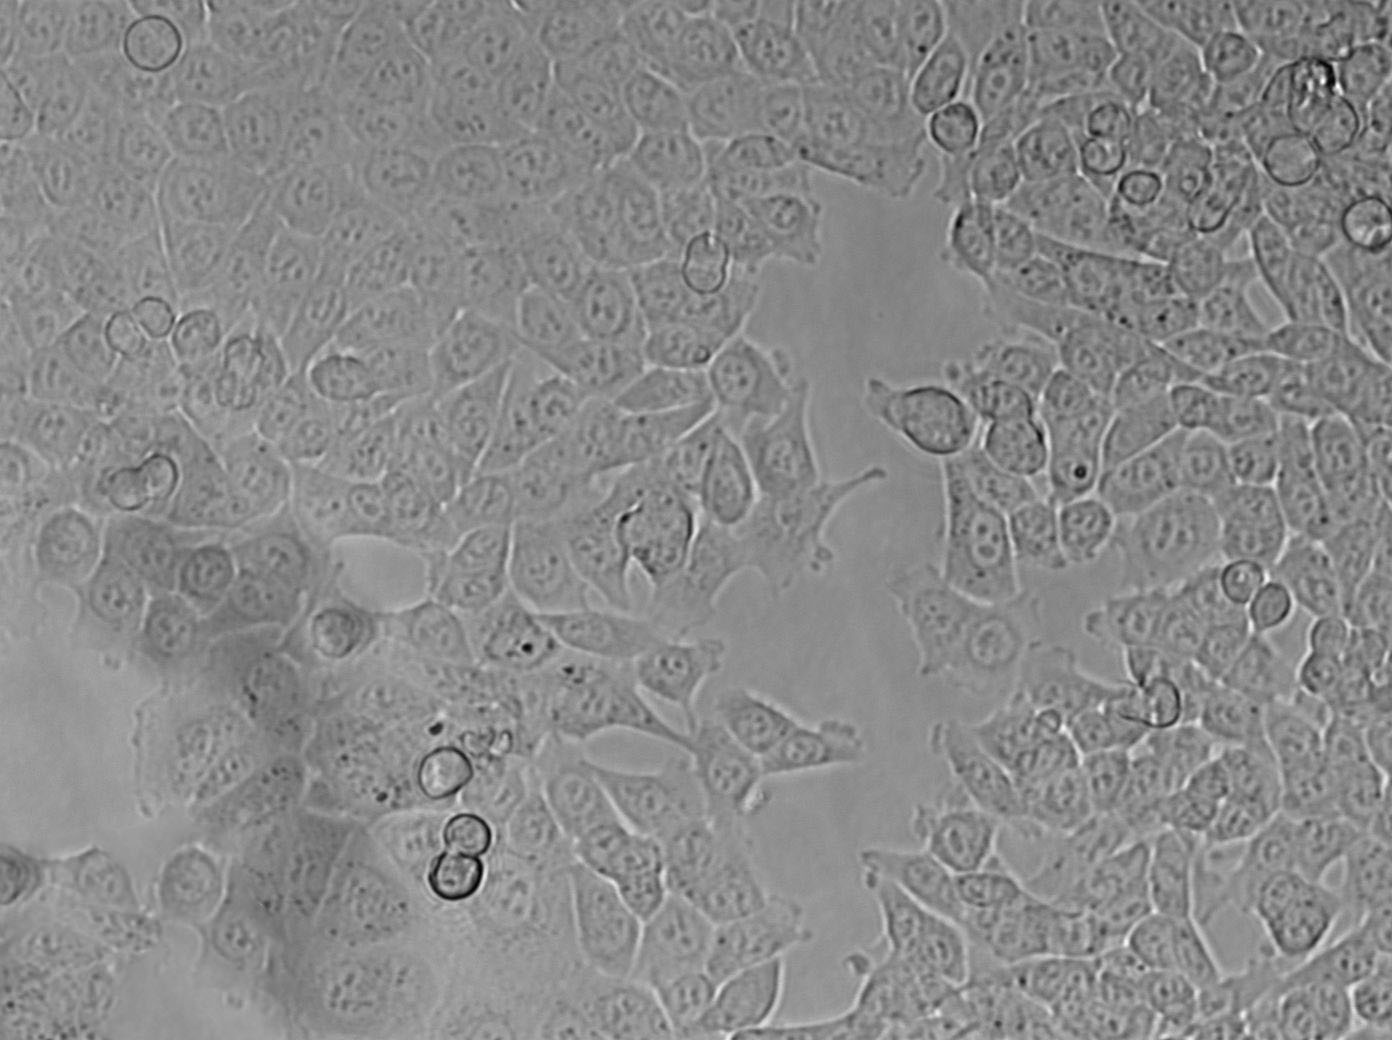 BC-020 Cell|人乳腺癌细胞